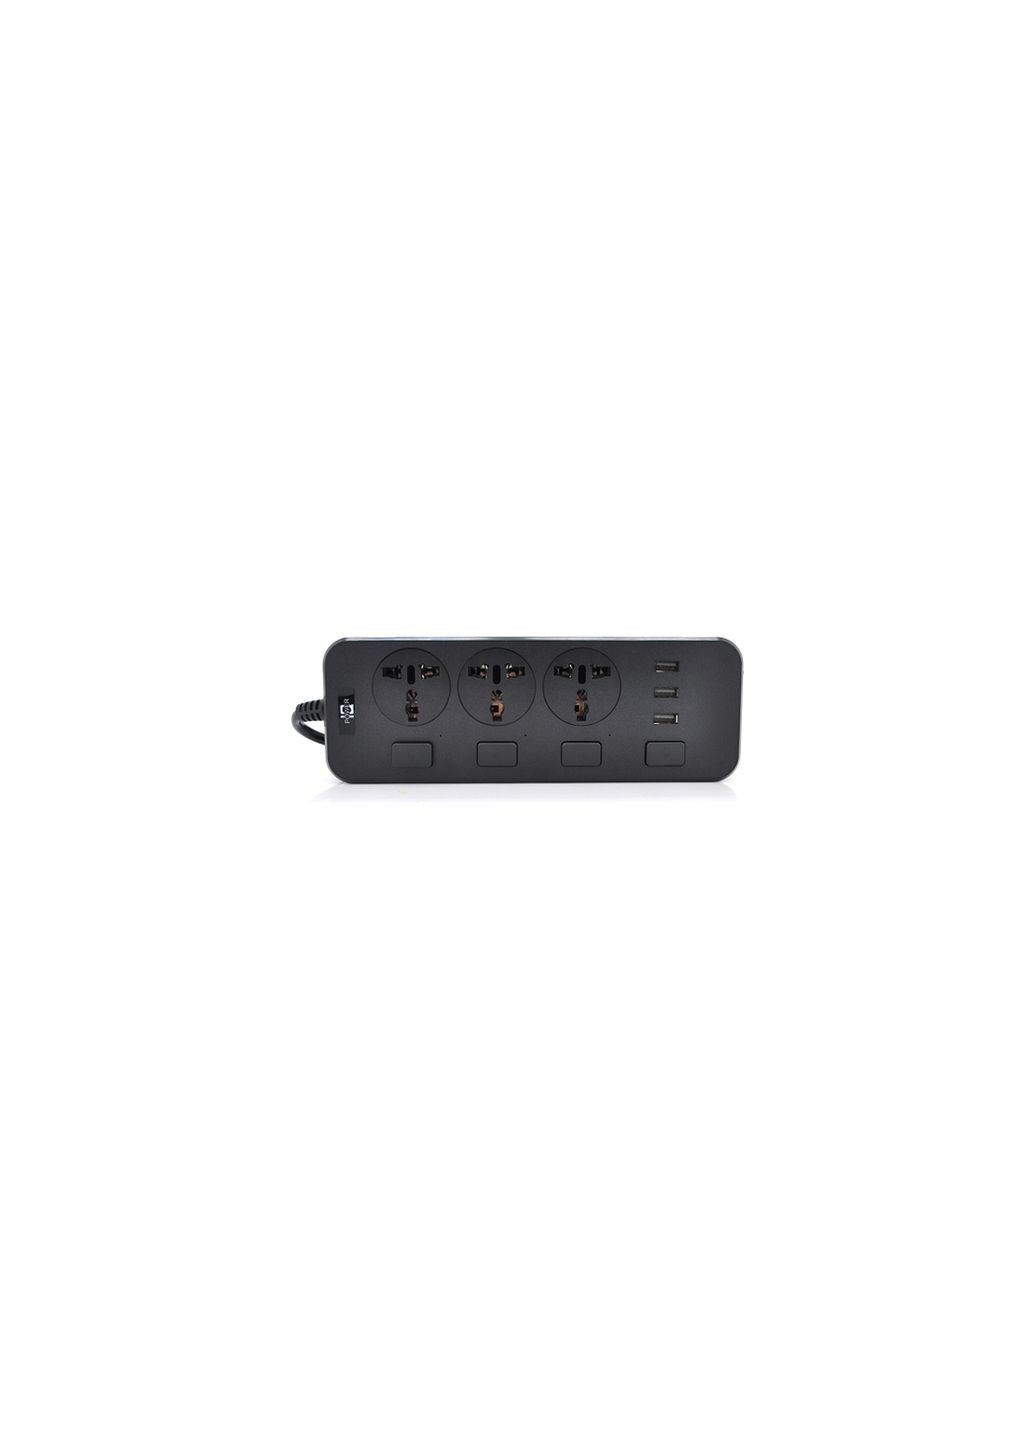 Сетевой фильтр питания TВТ14, 3роз, 3*USB Black (ТВ-Т14-Black) Voltronic tв-т14, 3роз, 3*usb black (280930857)